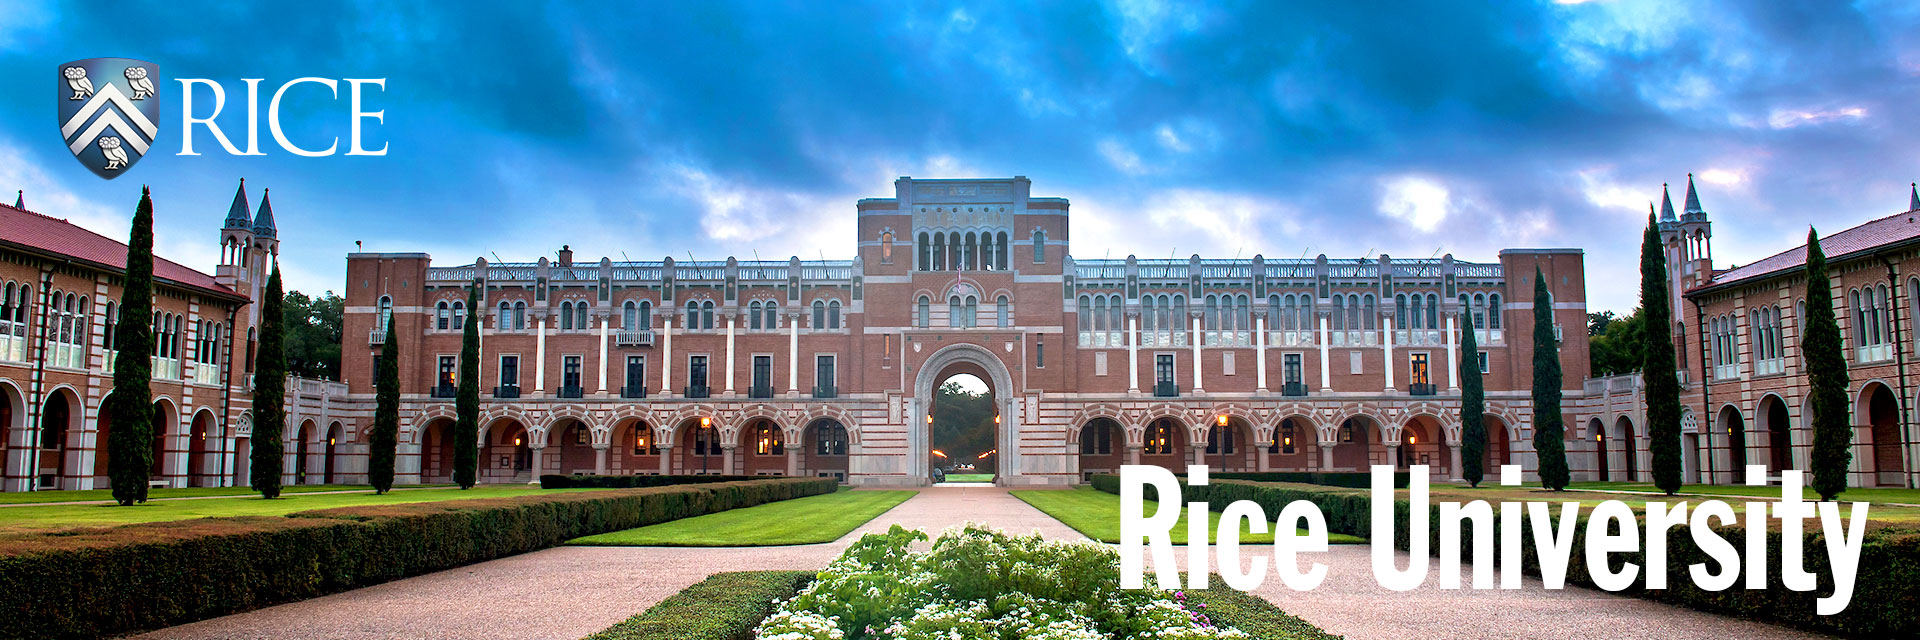 Rice University Summer Programs for High School Students